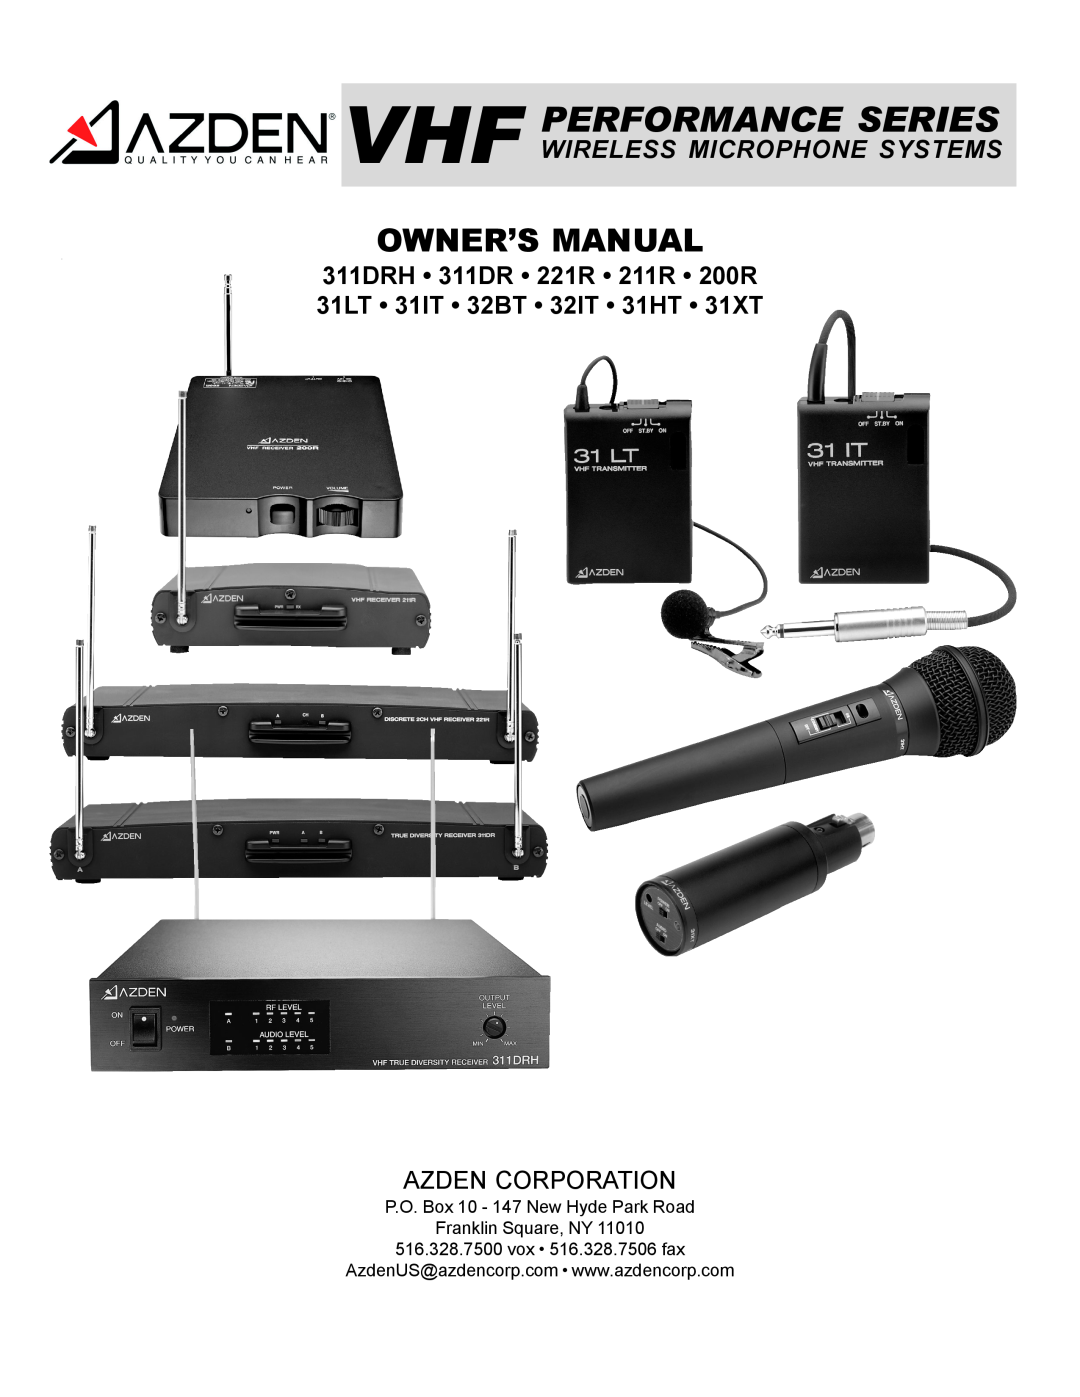 Azden 211R, 31XT, 311DRH 311, 31IT, 200R owner manual Vhf Performance Series, Wireless Microphone Systems, Azden Corporation 